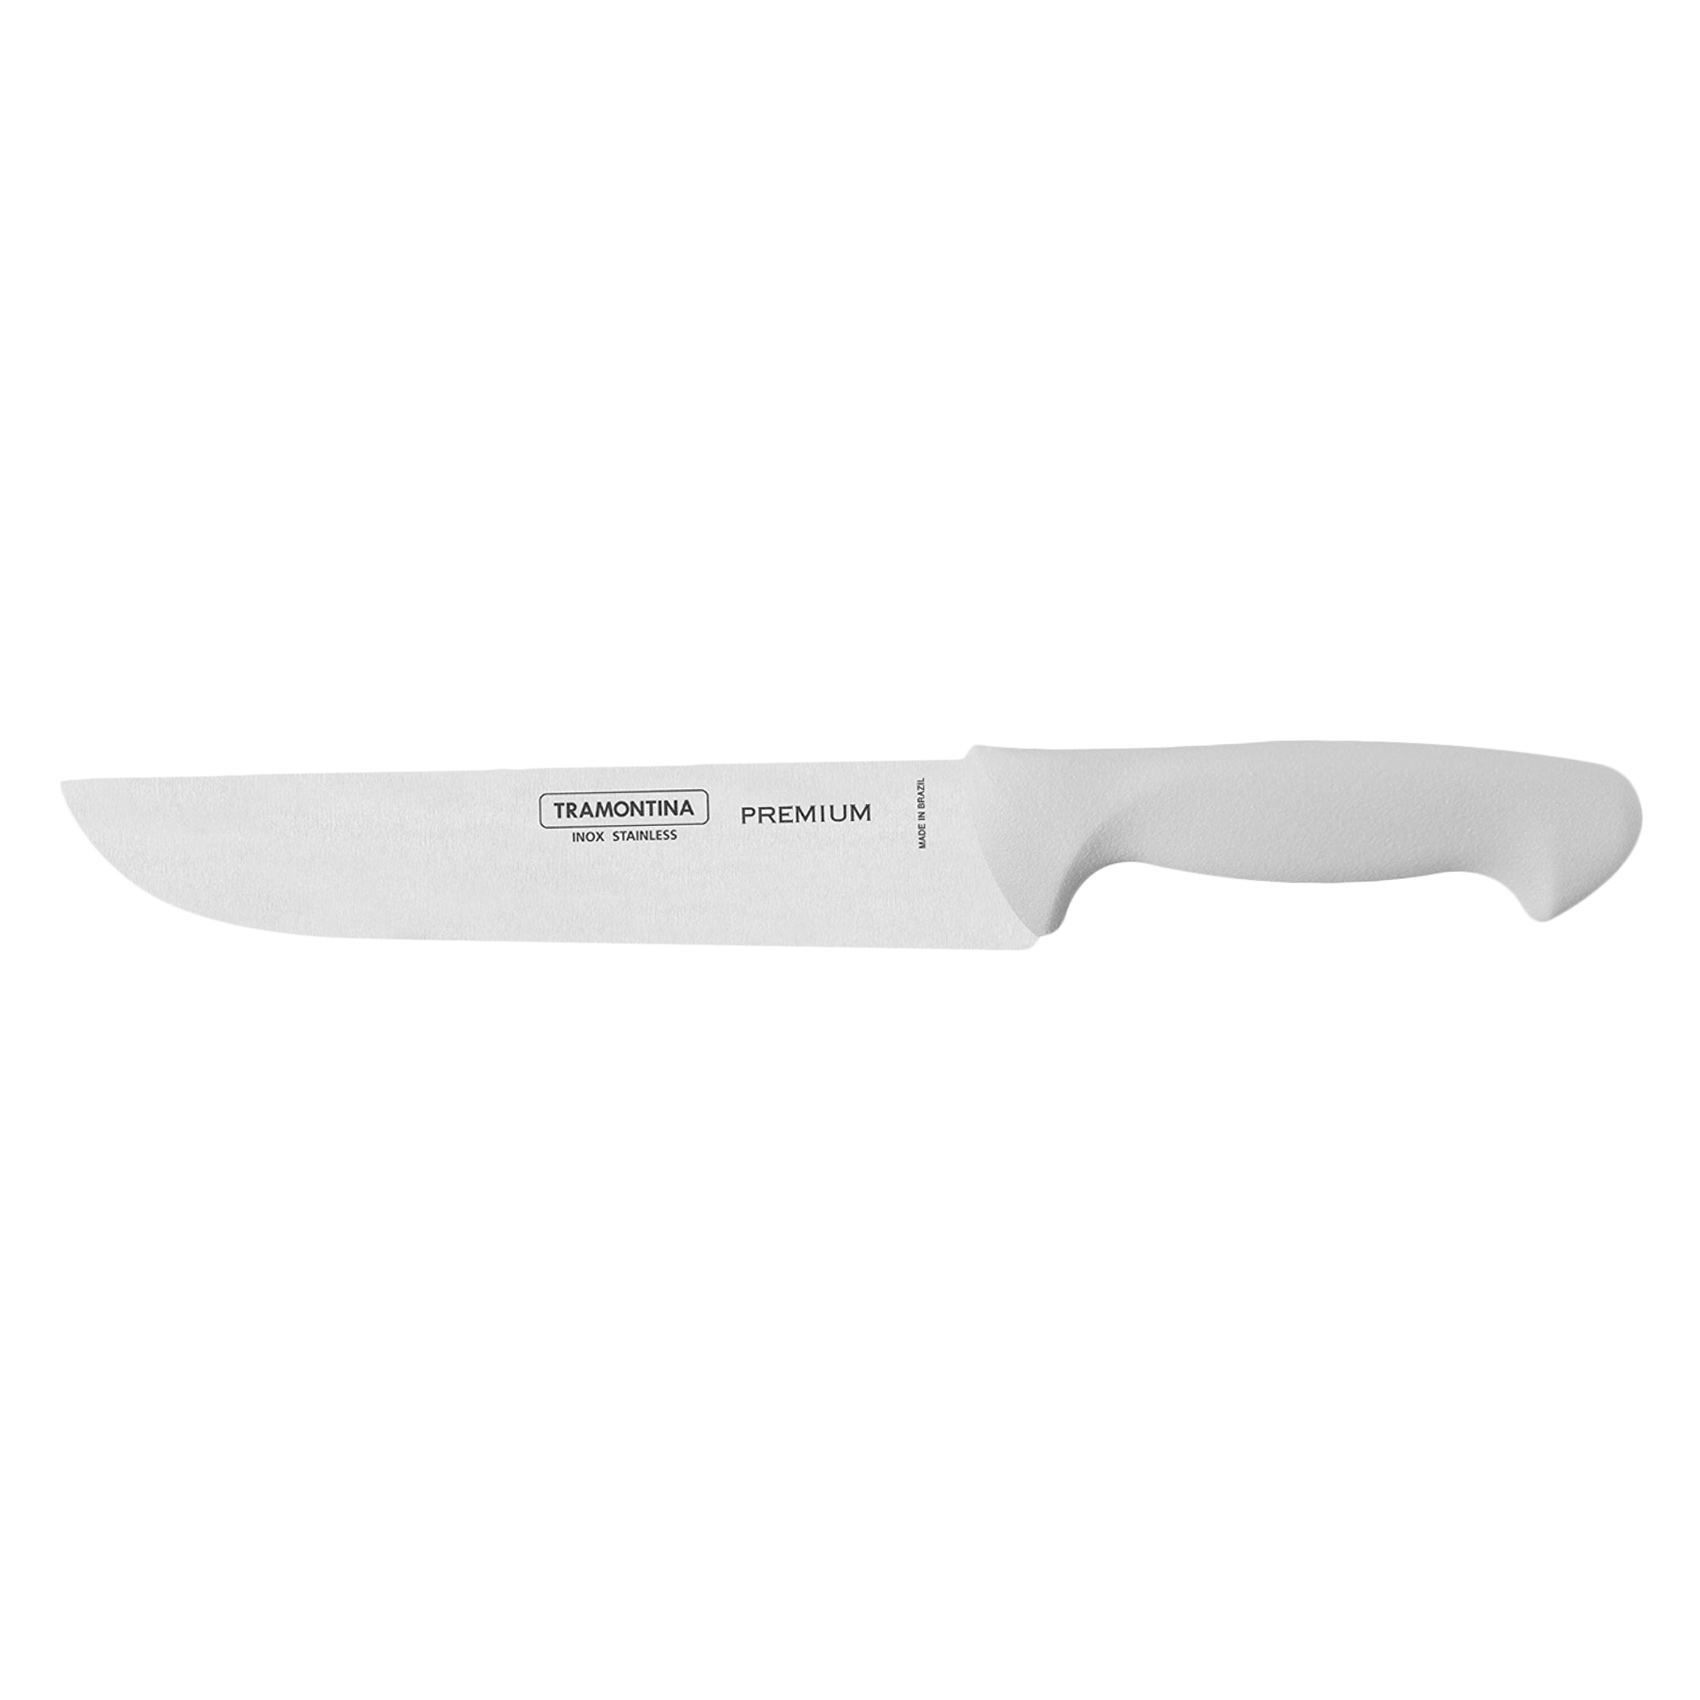 Tramontina Meat Knife Premium 8 Inch